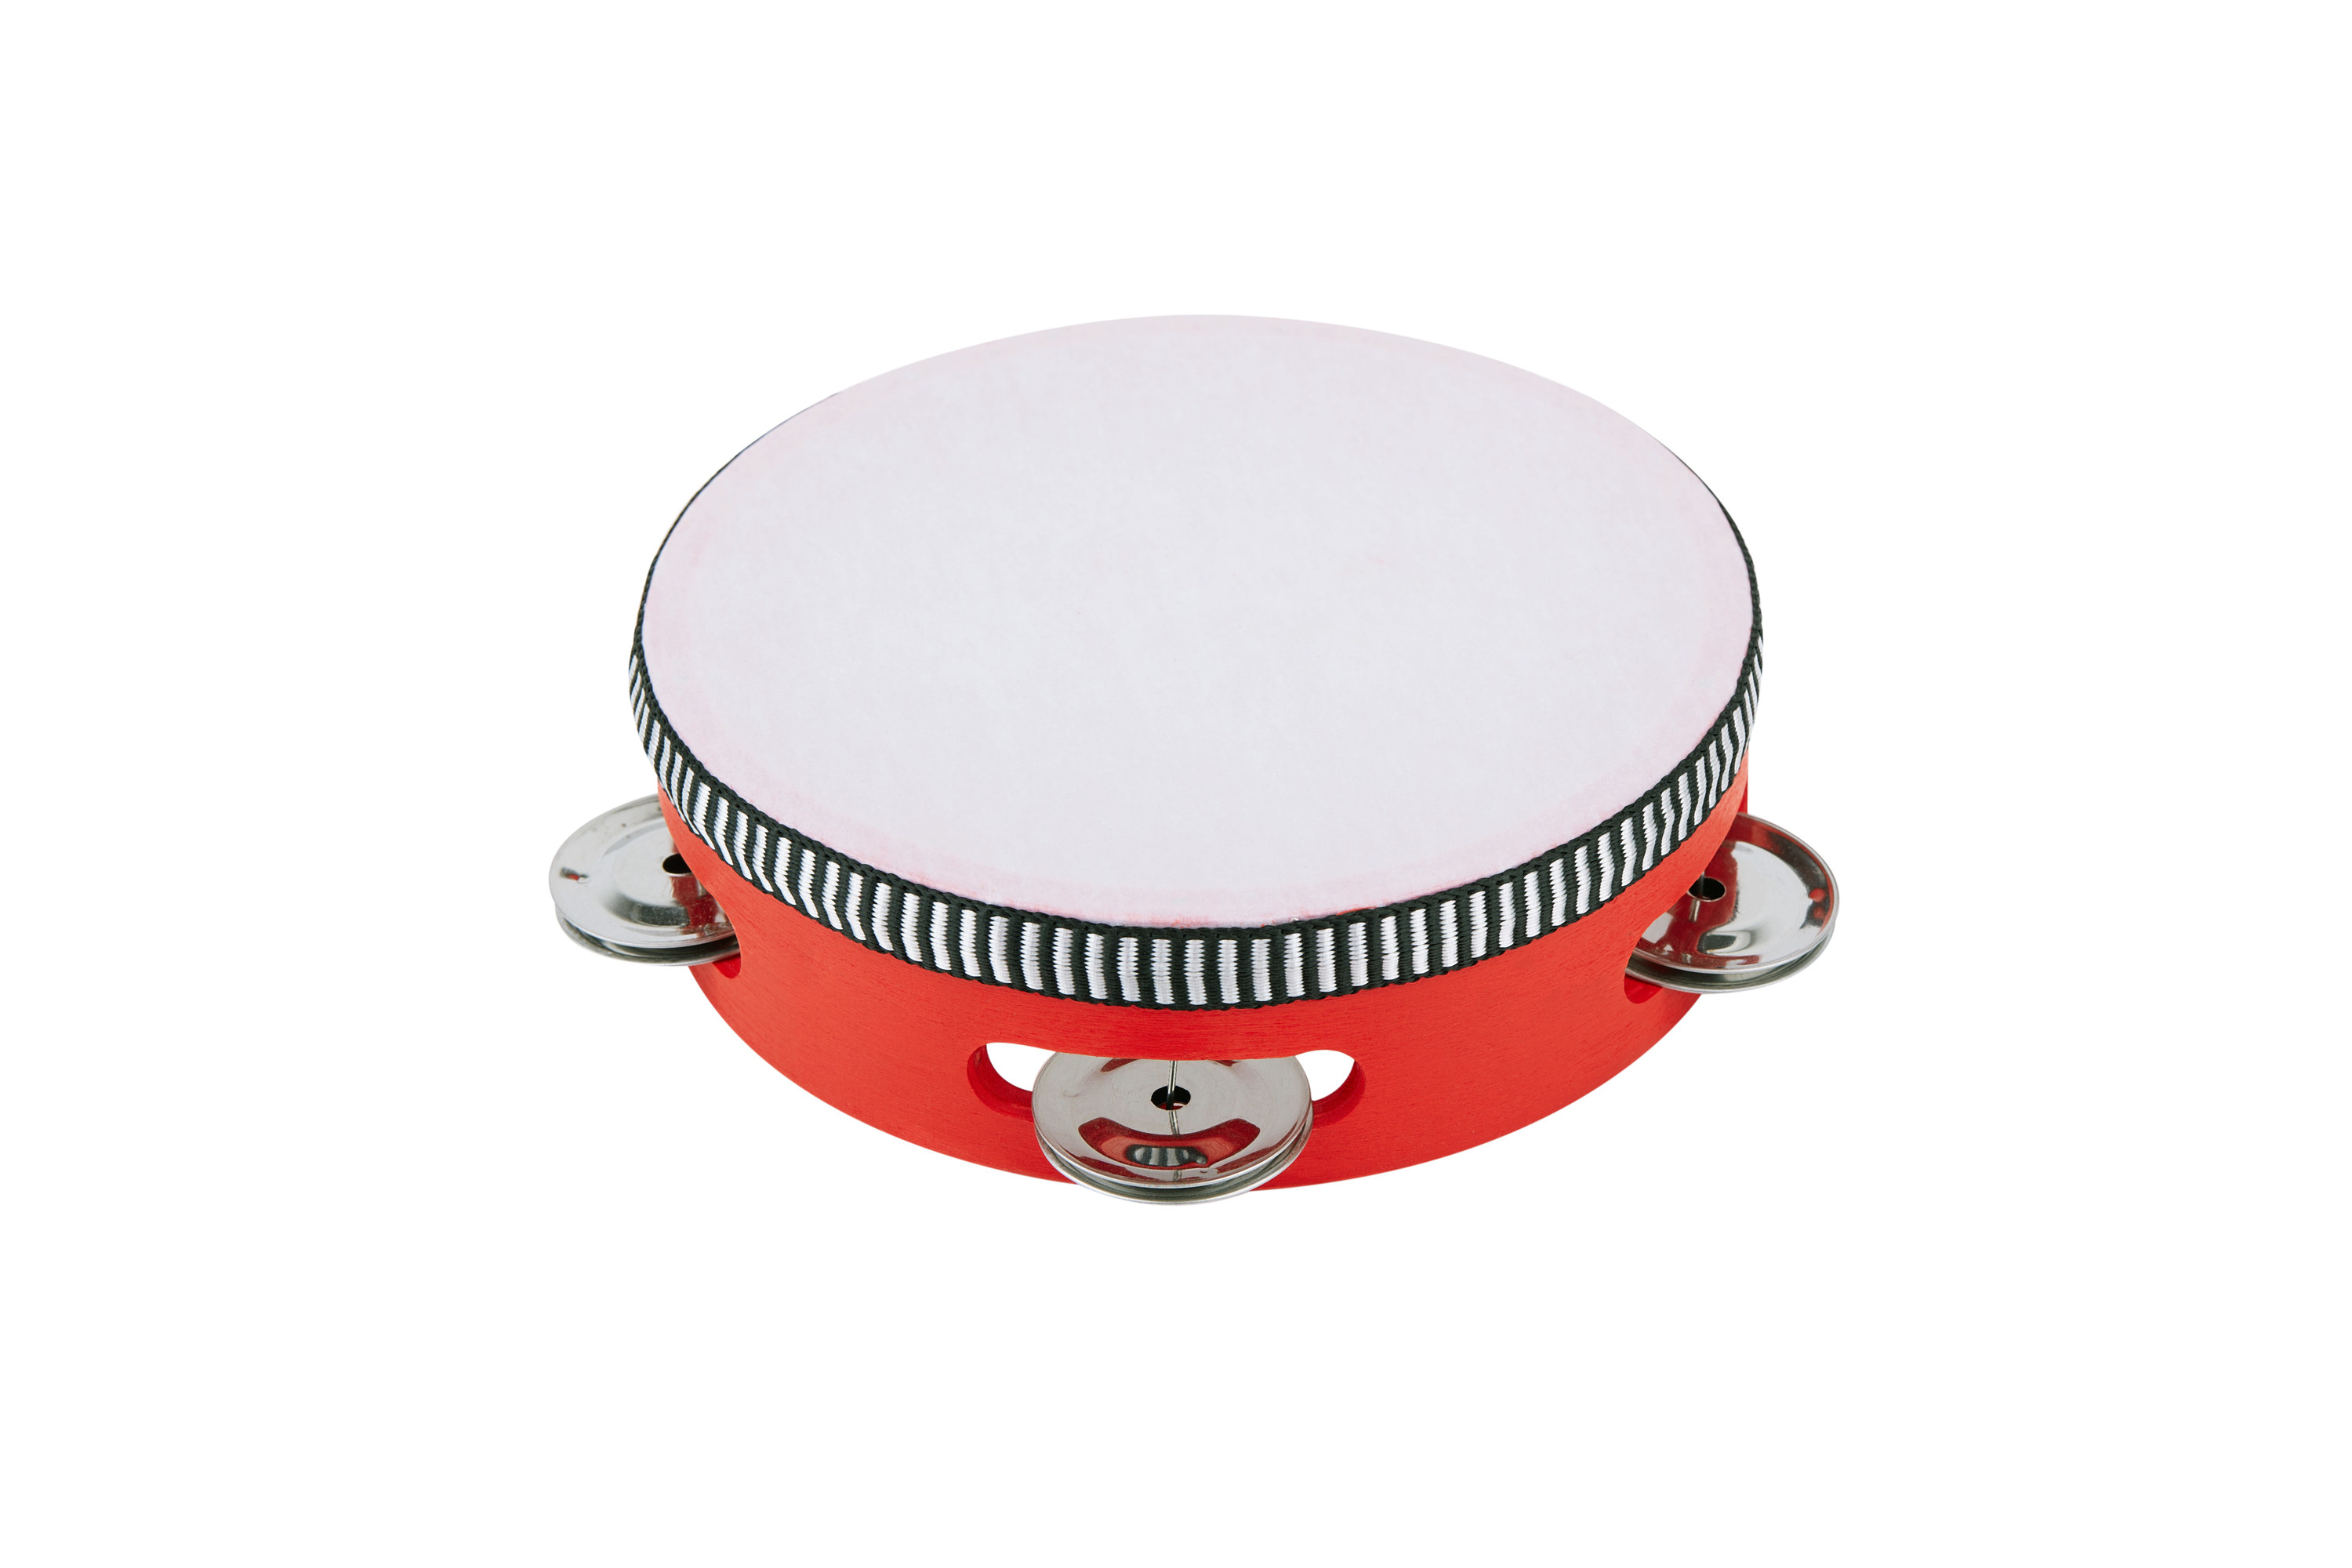 A tambourine